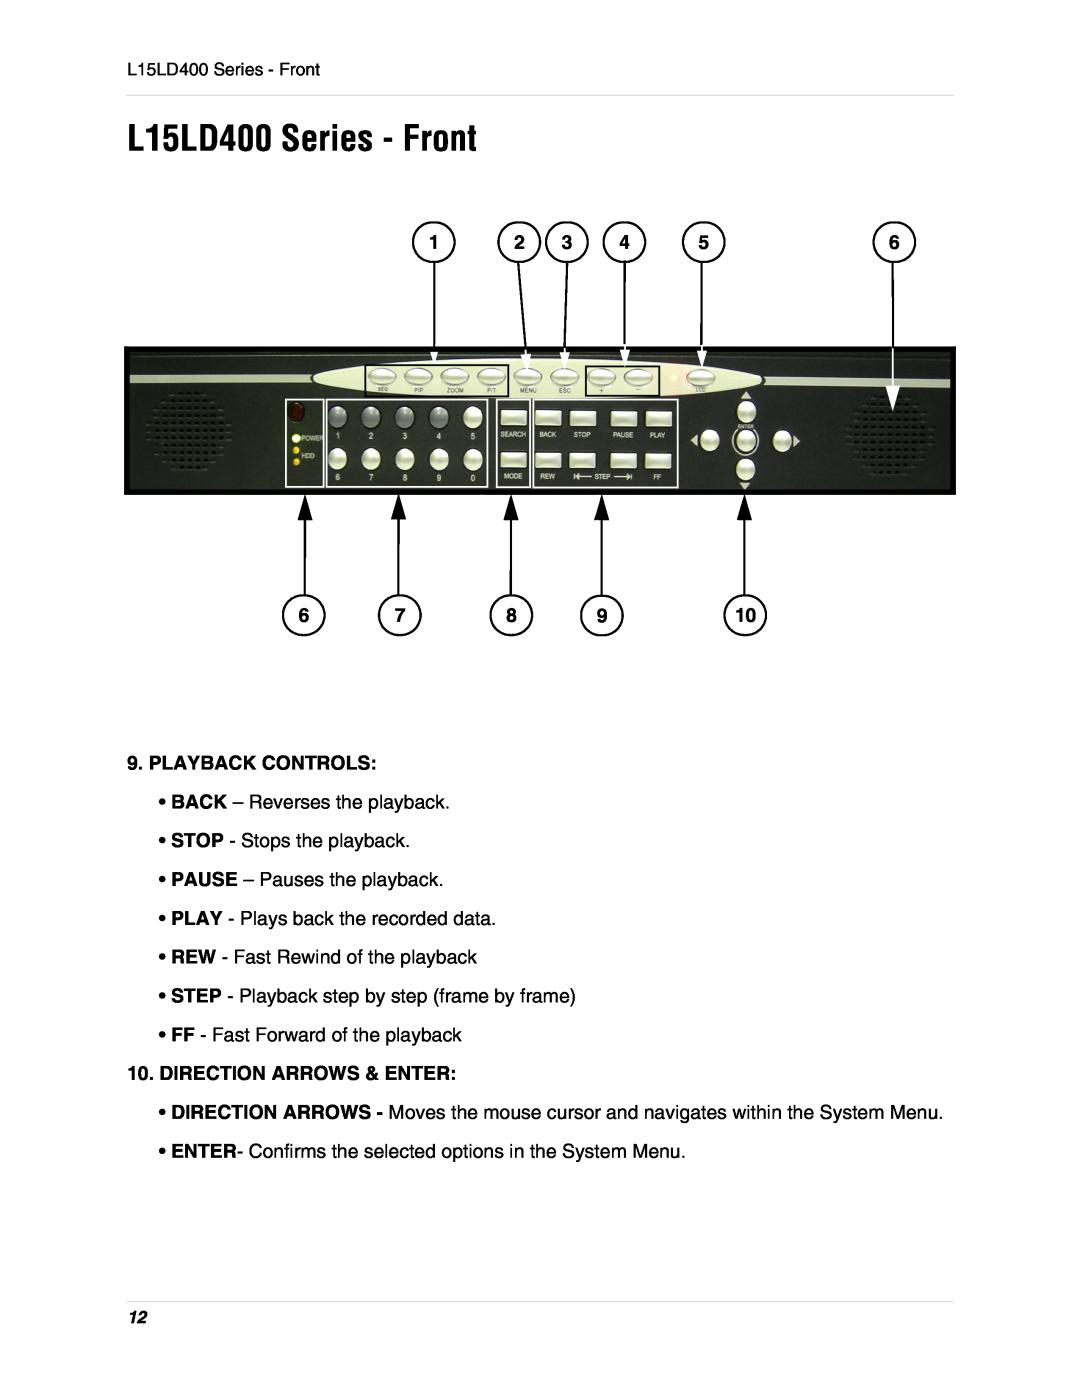 LOREX Technology L15D400 instruction manual L15LD400 Series - Front, Playback Controls, Direction Arrows & Enter 